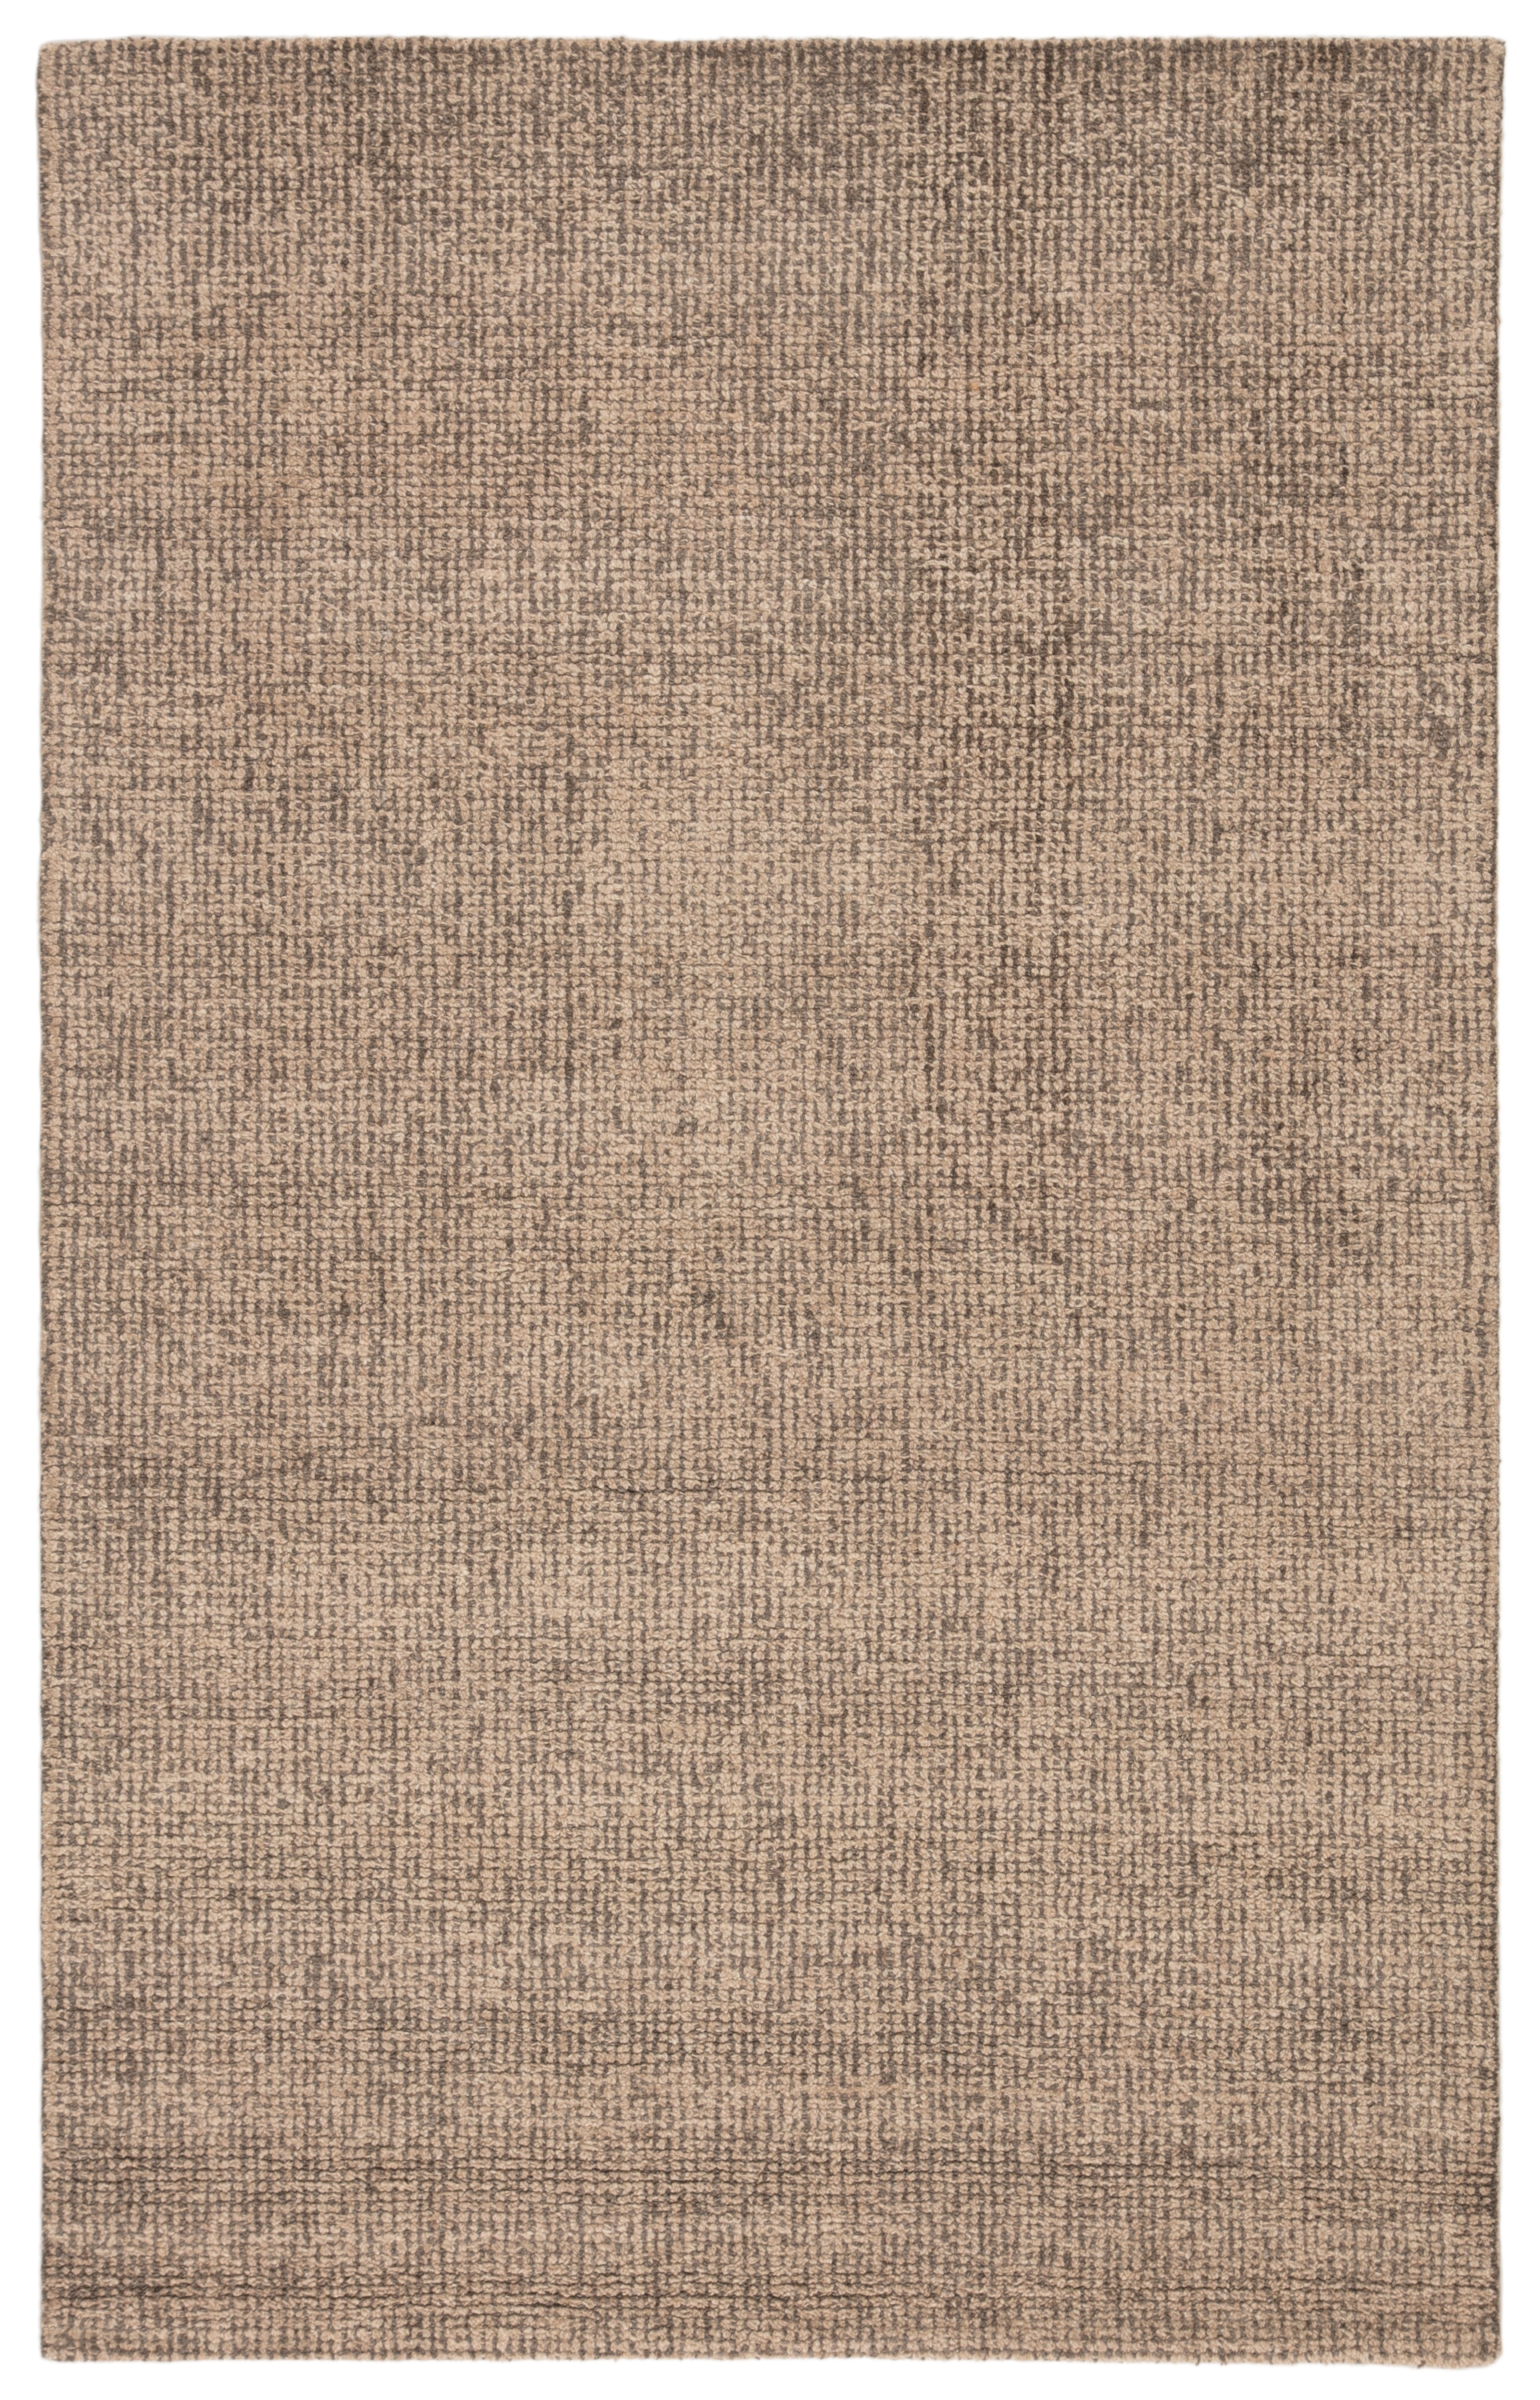 Oland Handmade Solid Gray/ Tan Area Rug (8' X 10') - Image 0